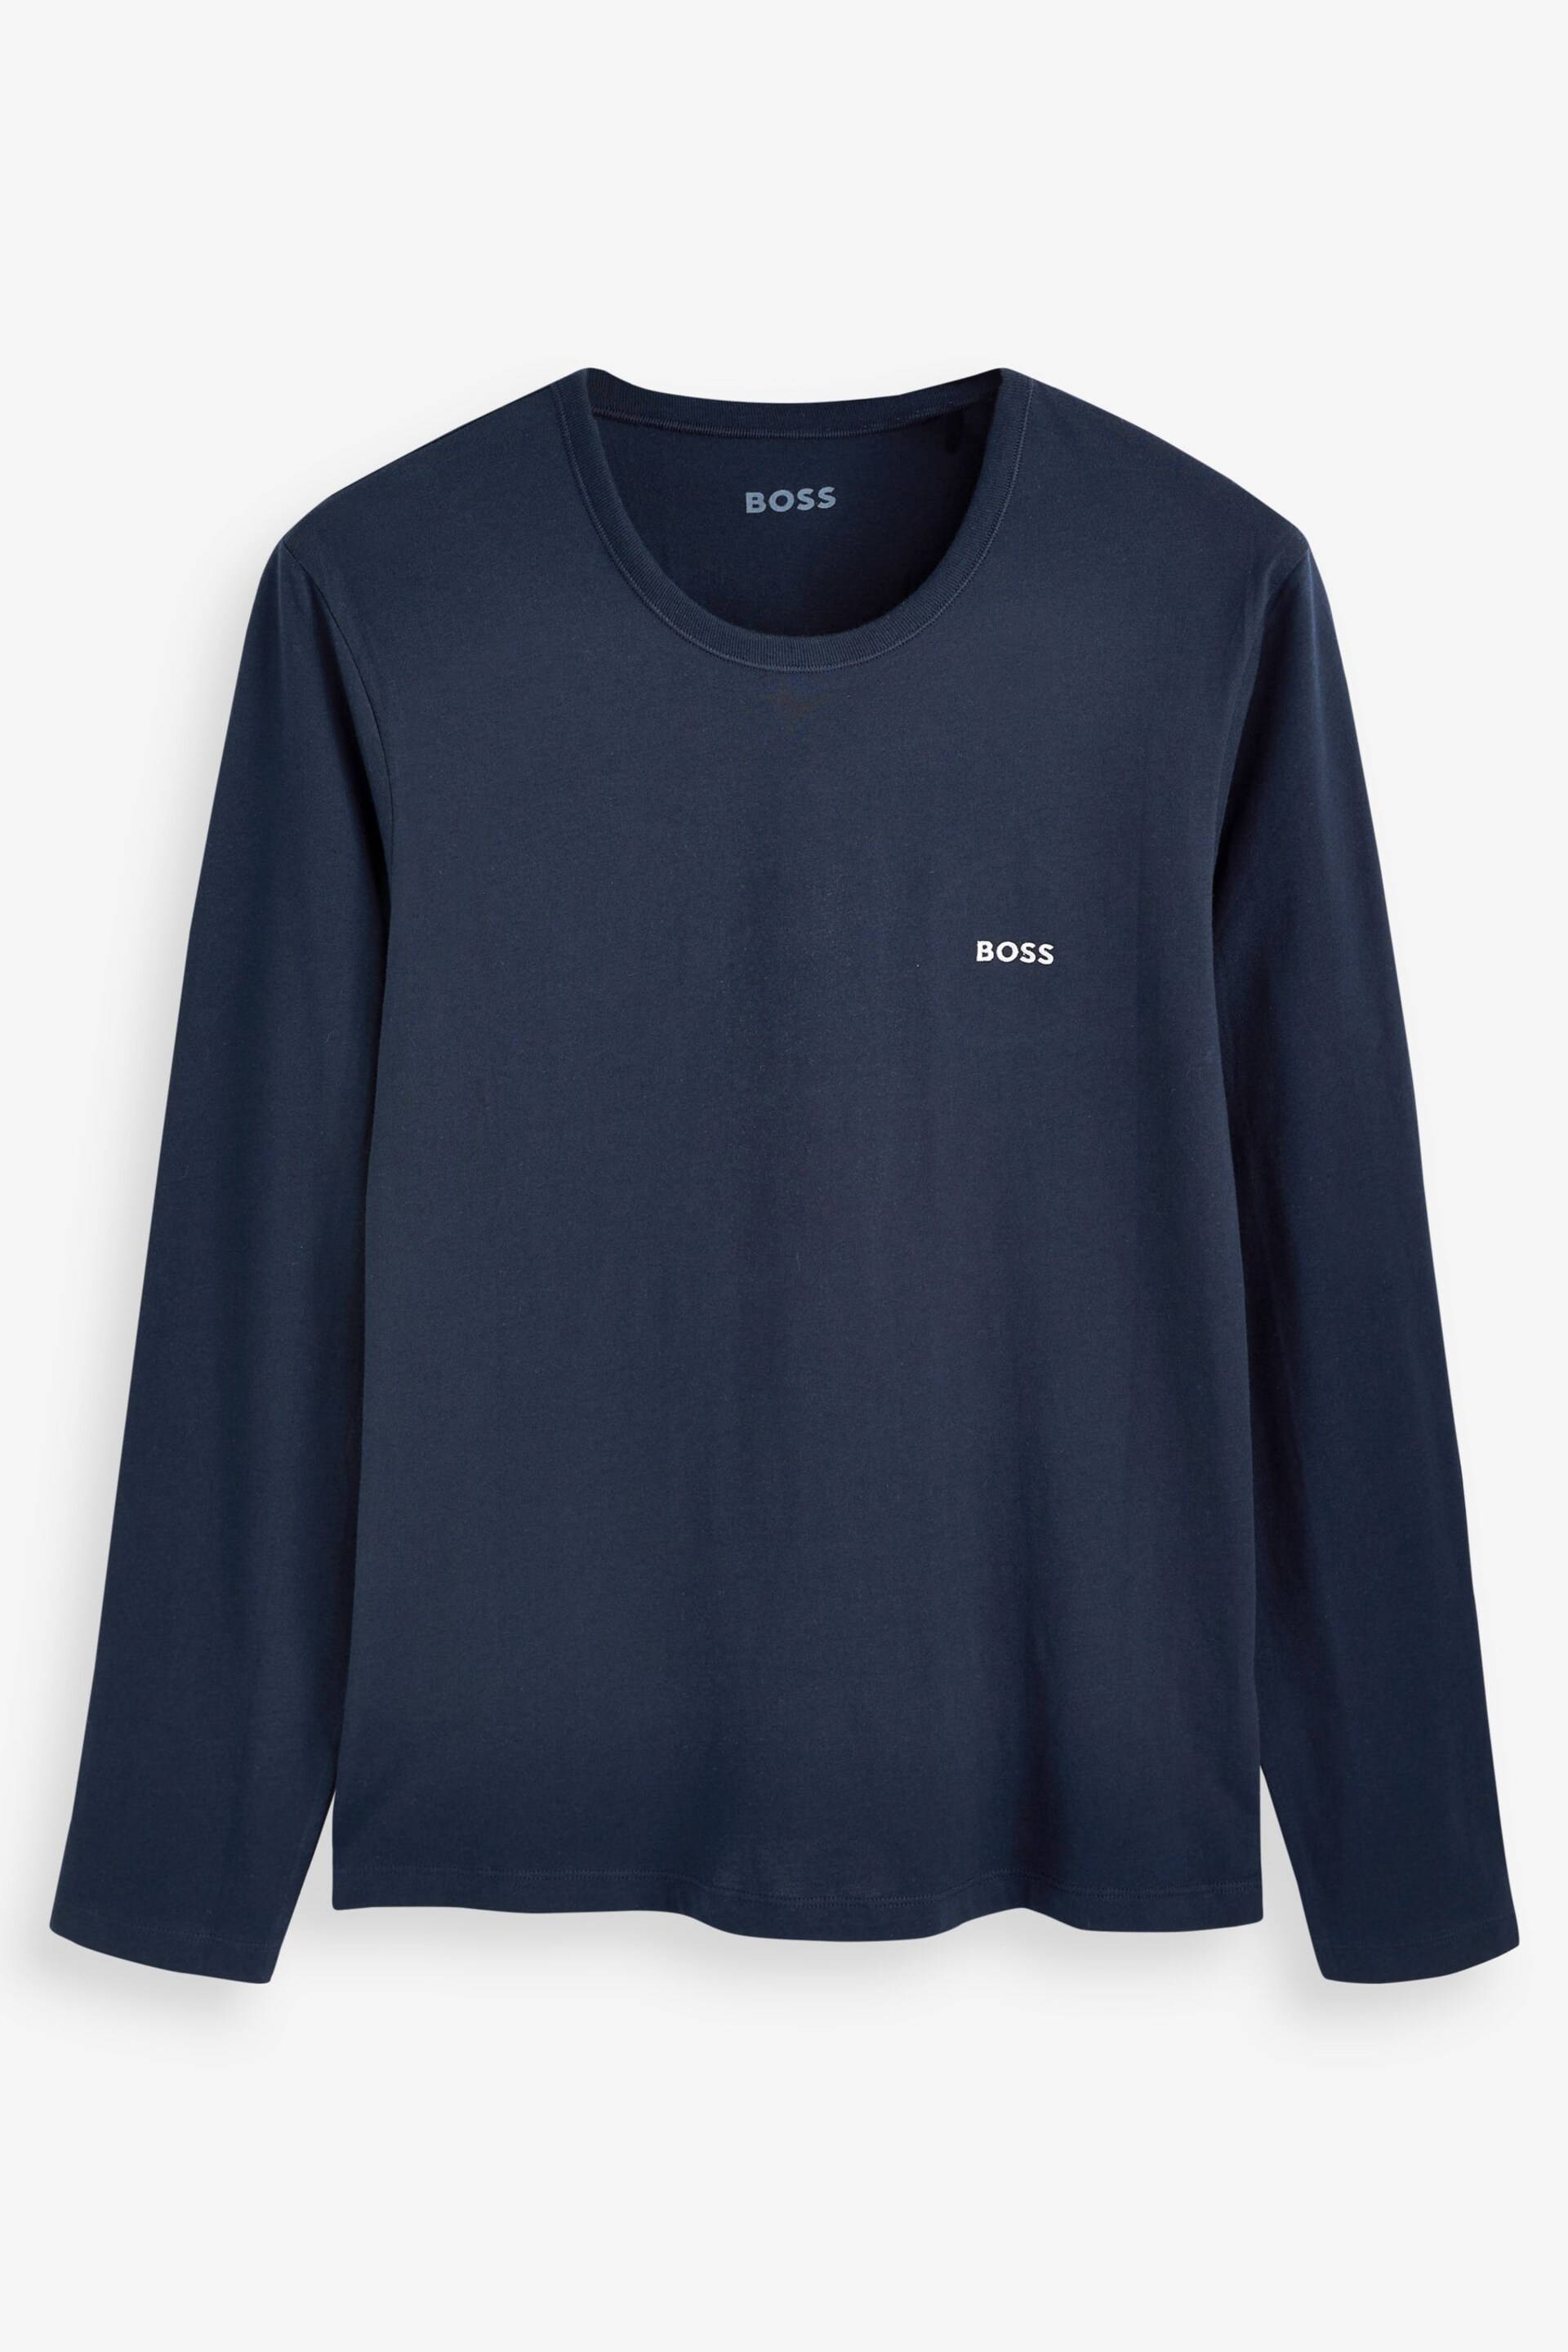 BOSS Black Long Sleeve T-Shirt 3 Pack - Image 4 of 8